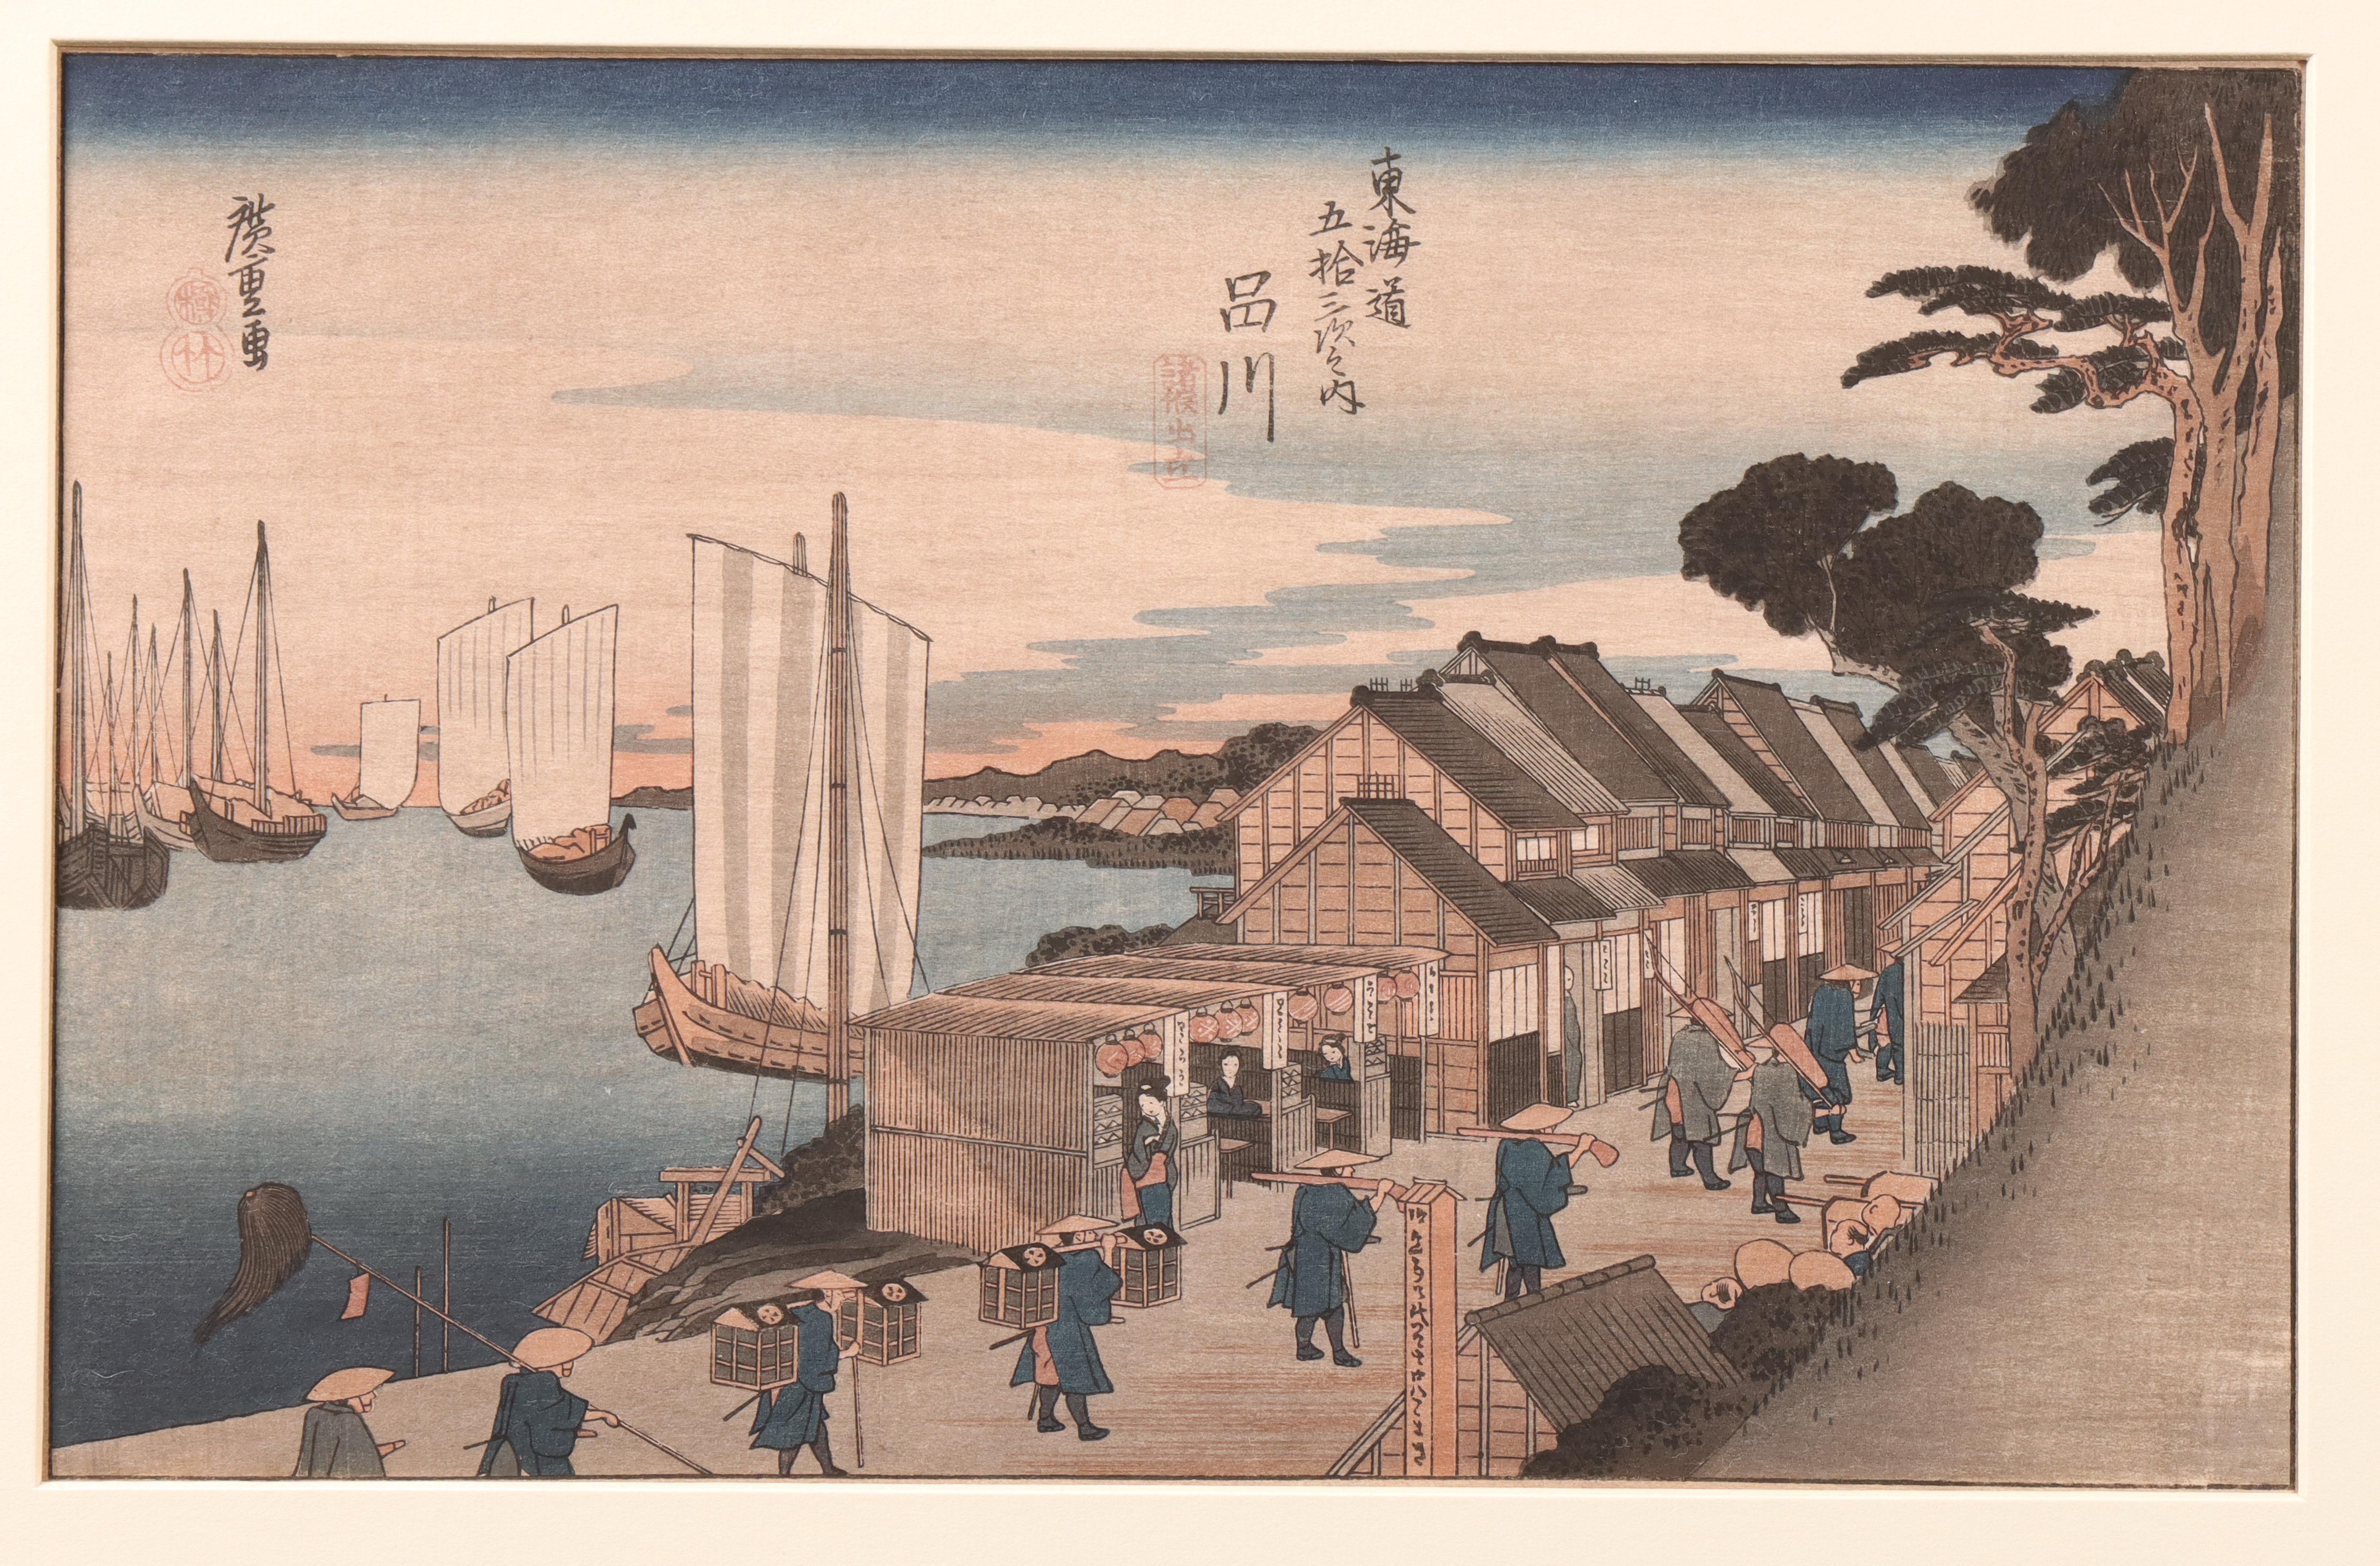 Japan, collection of woodblock prints, Hiroshige